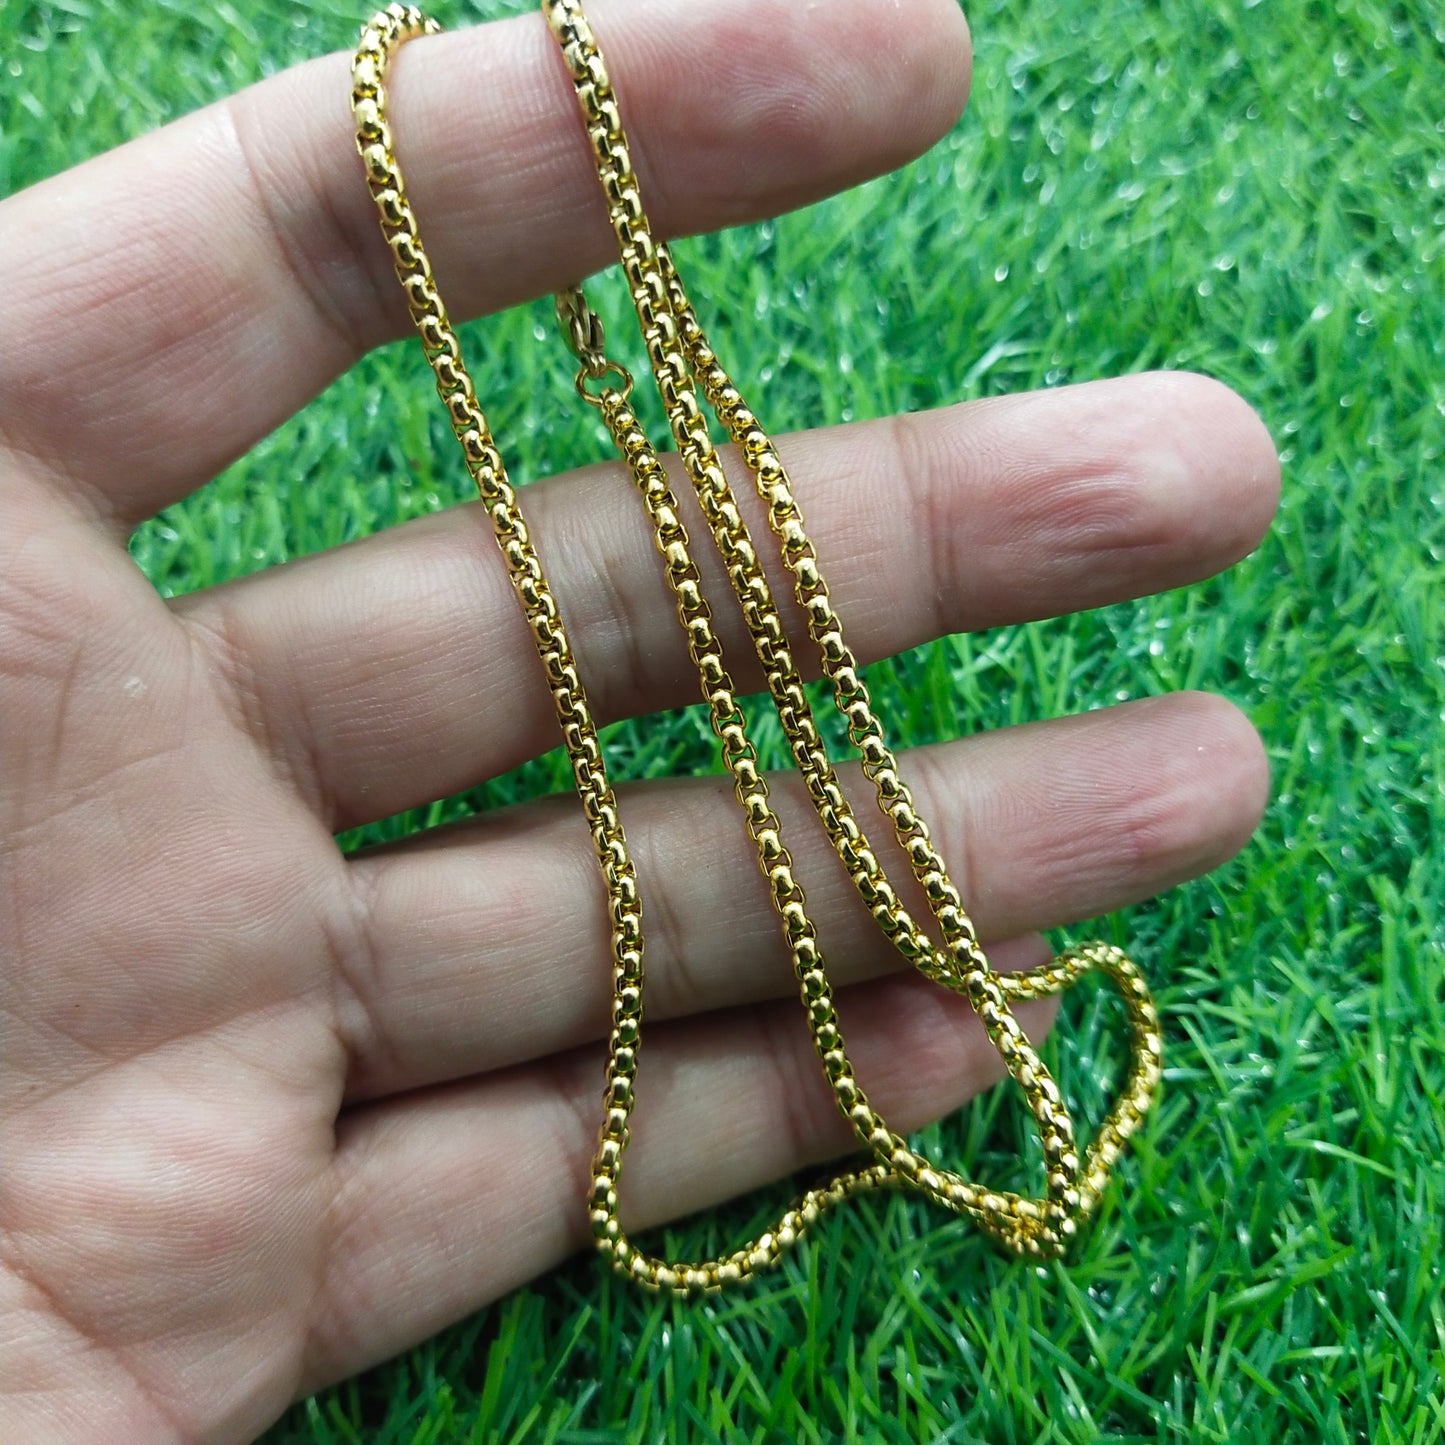 3mm Golden round box chain necklace for men online in Pakistan